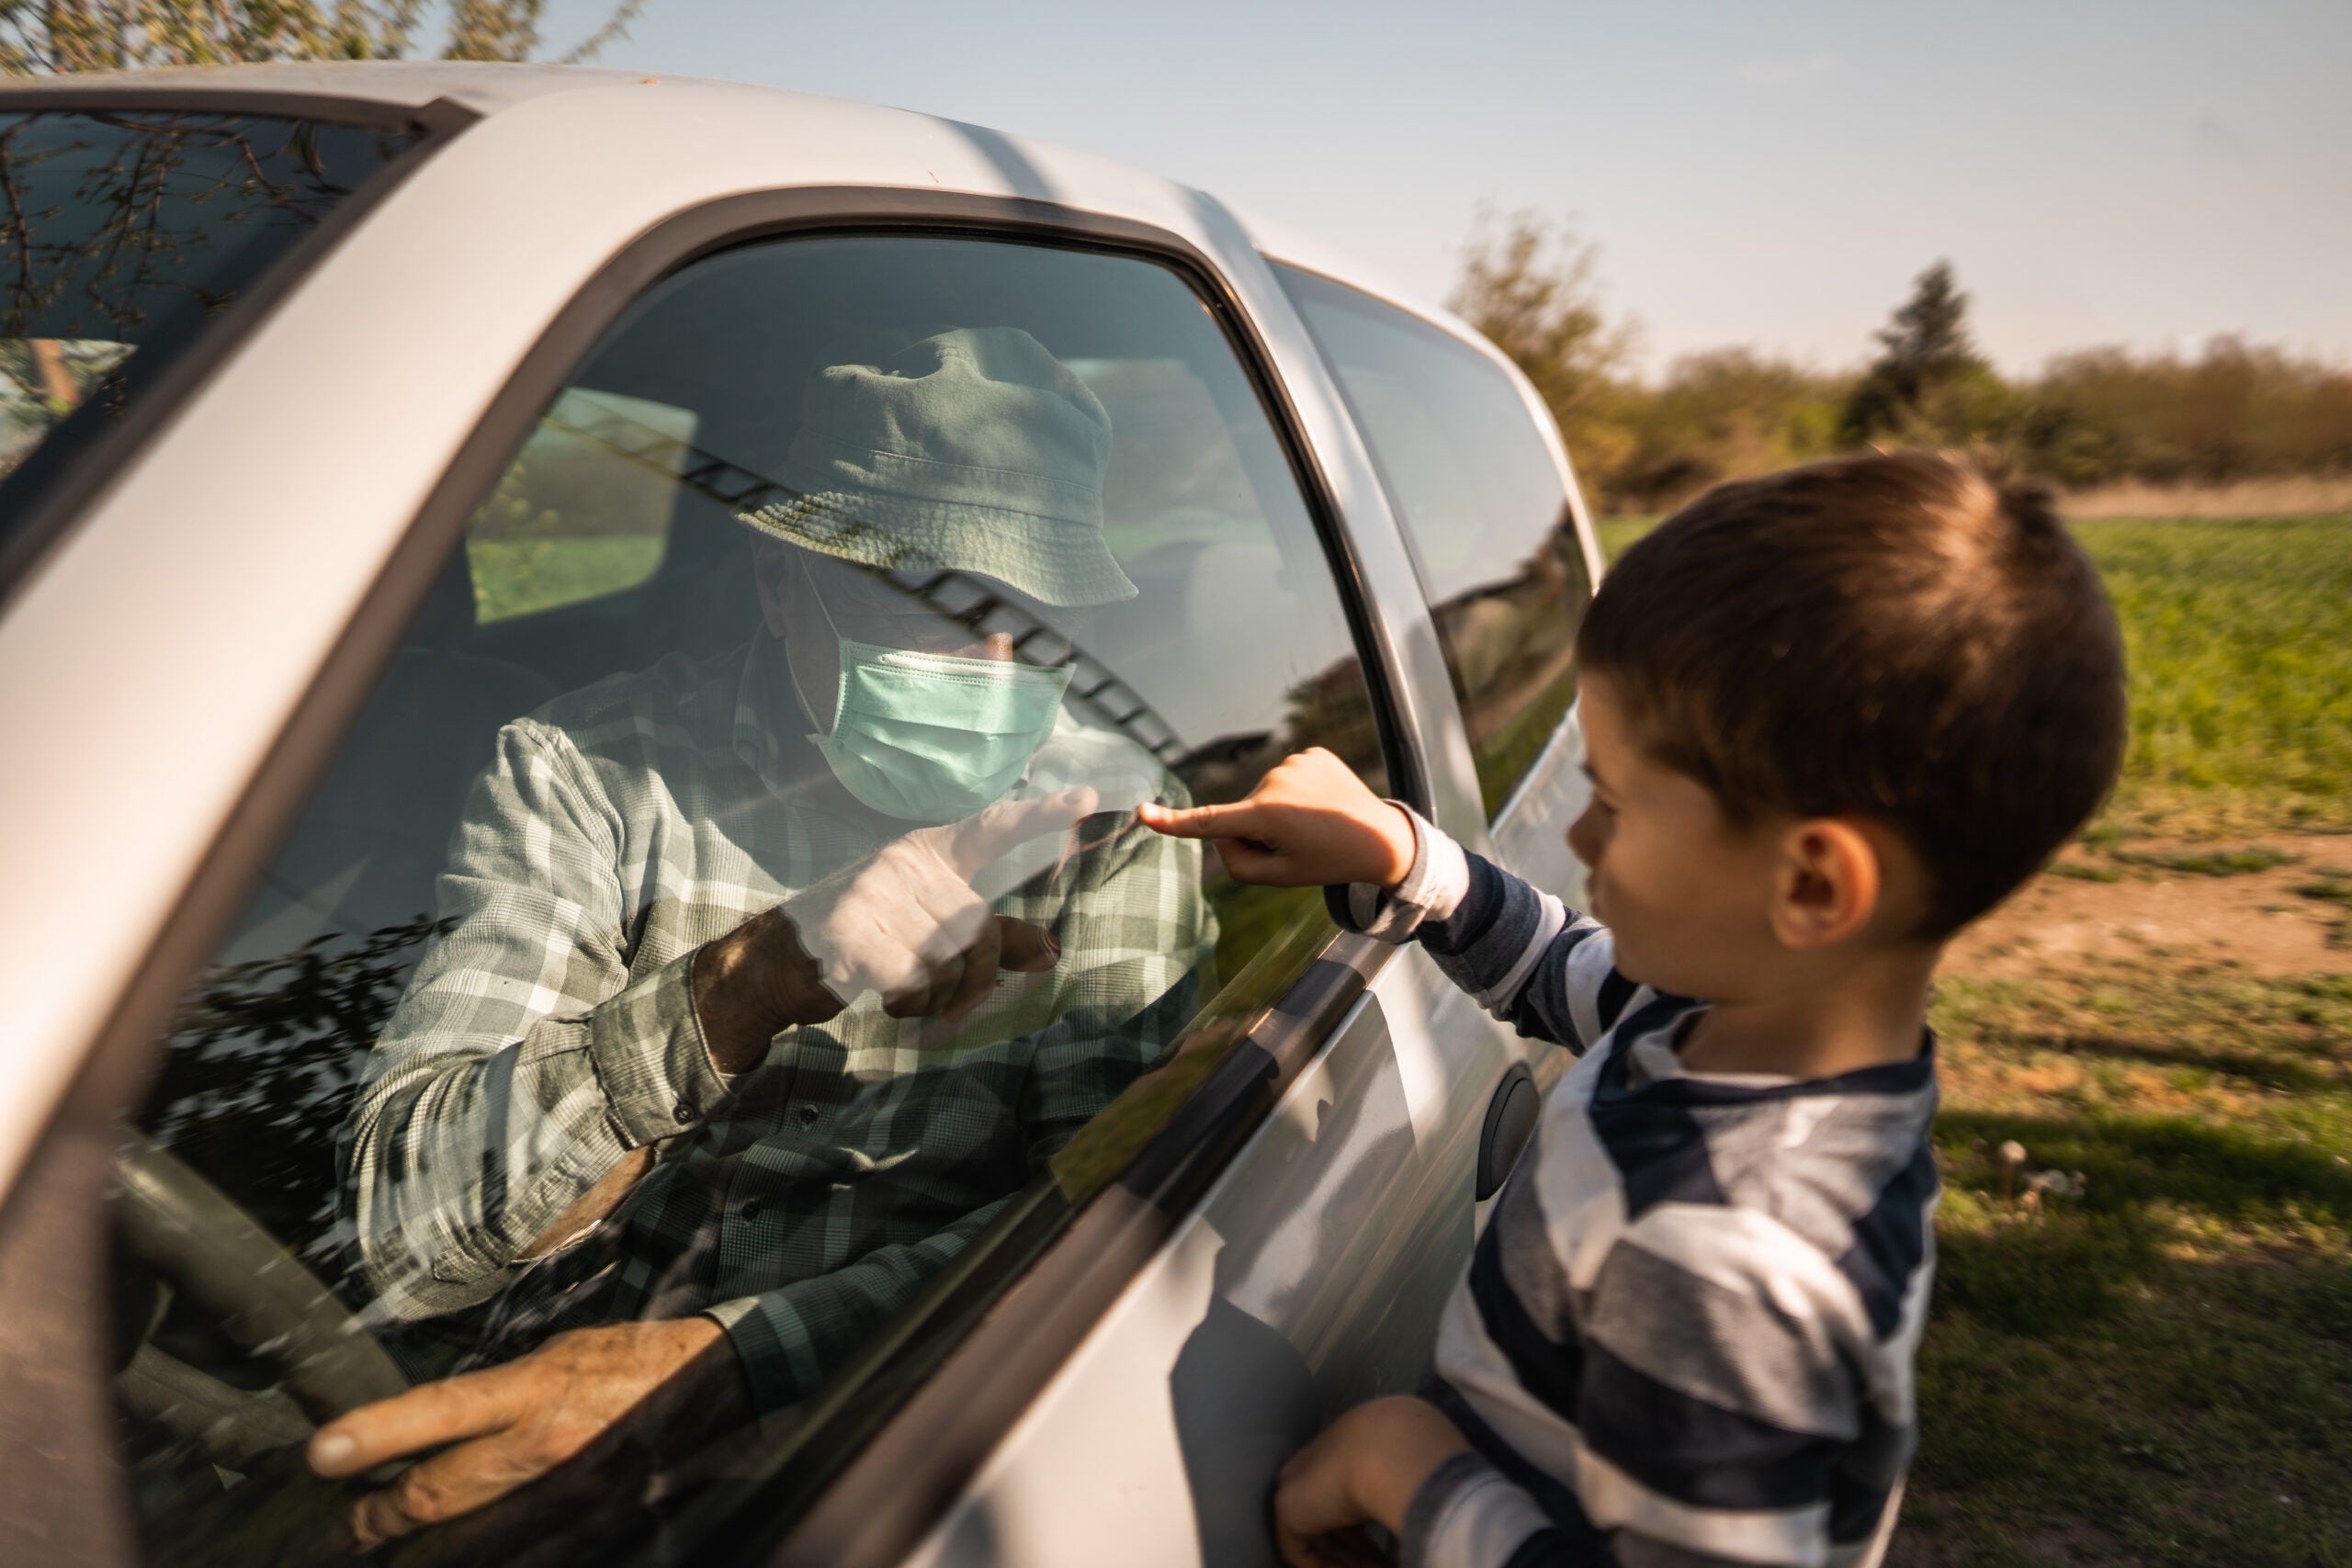 Grandfather and grandson, greeting through car window during coronavirus pandemic